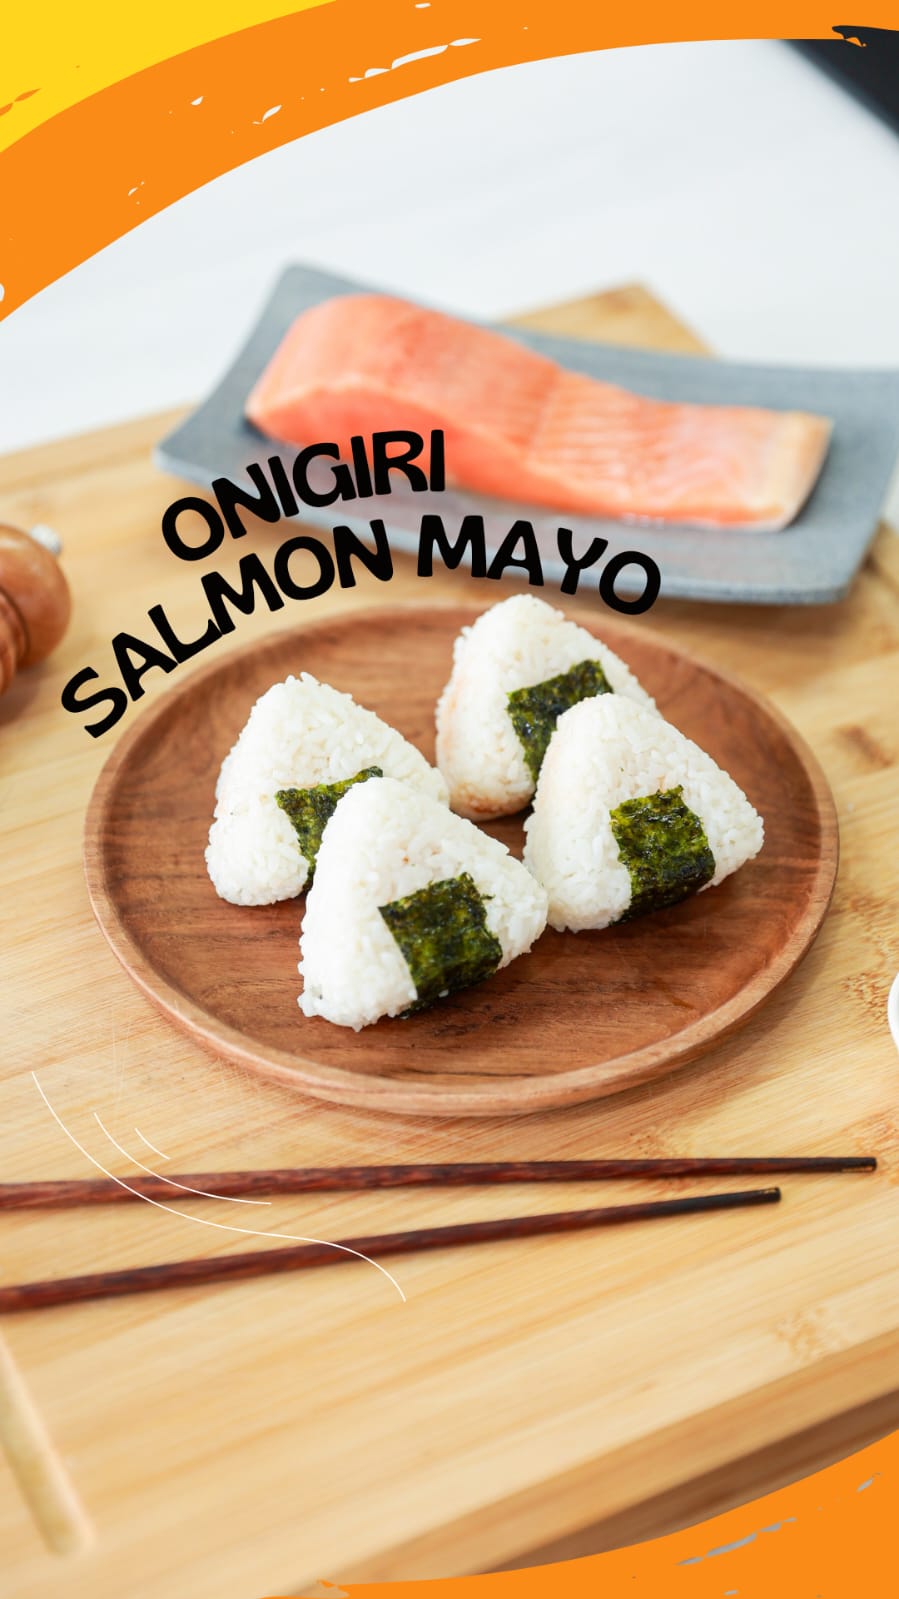 Resep Onigiri Salmon Mayo, Bisa Jadi Ide Bekal Ngantor dan Piknik